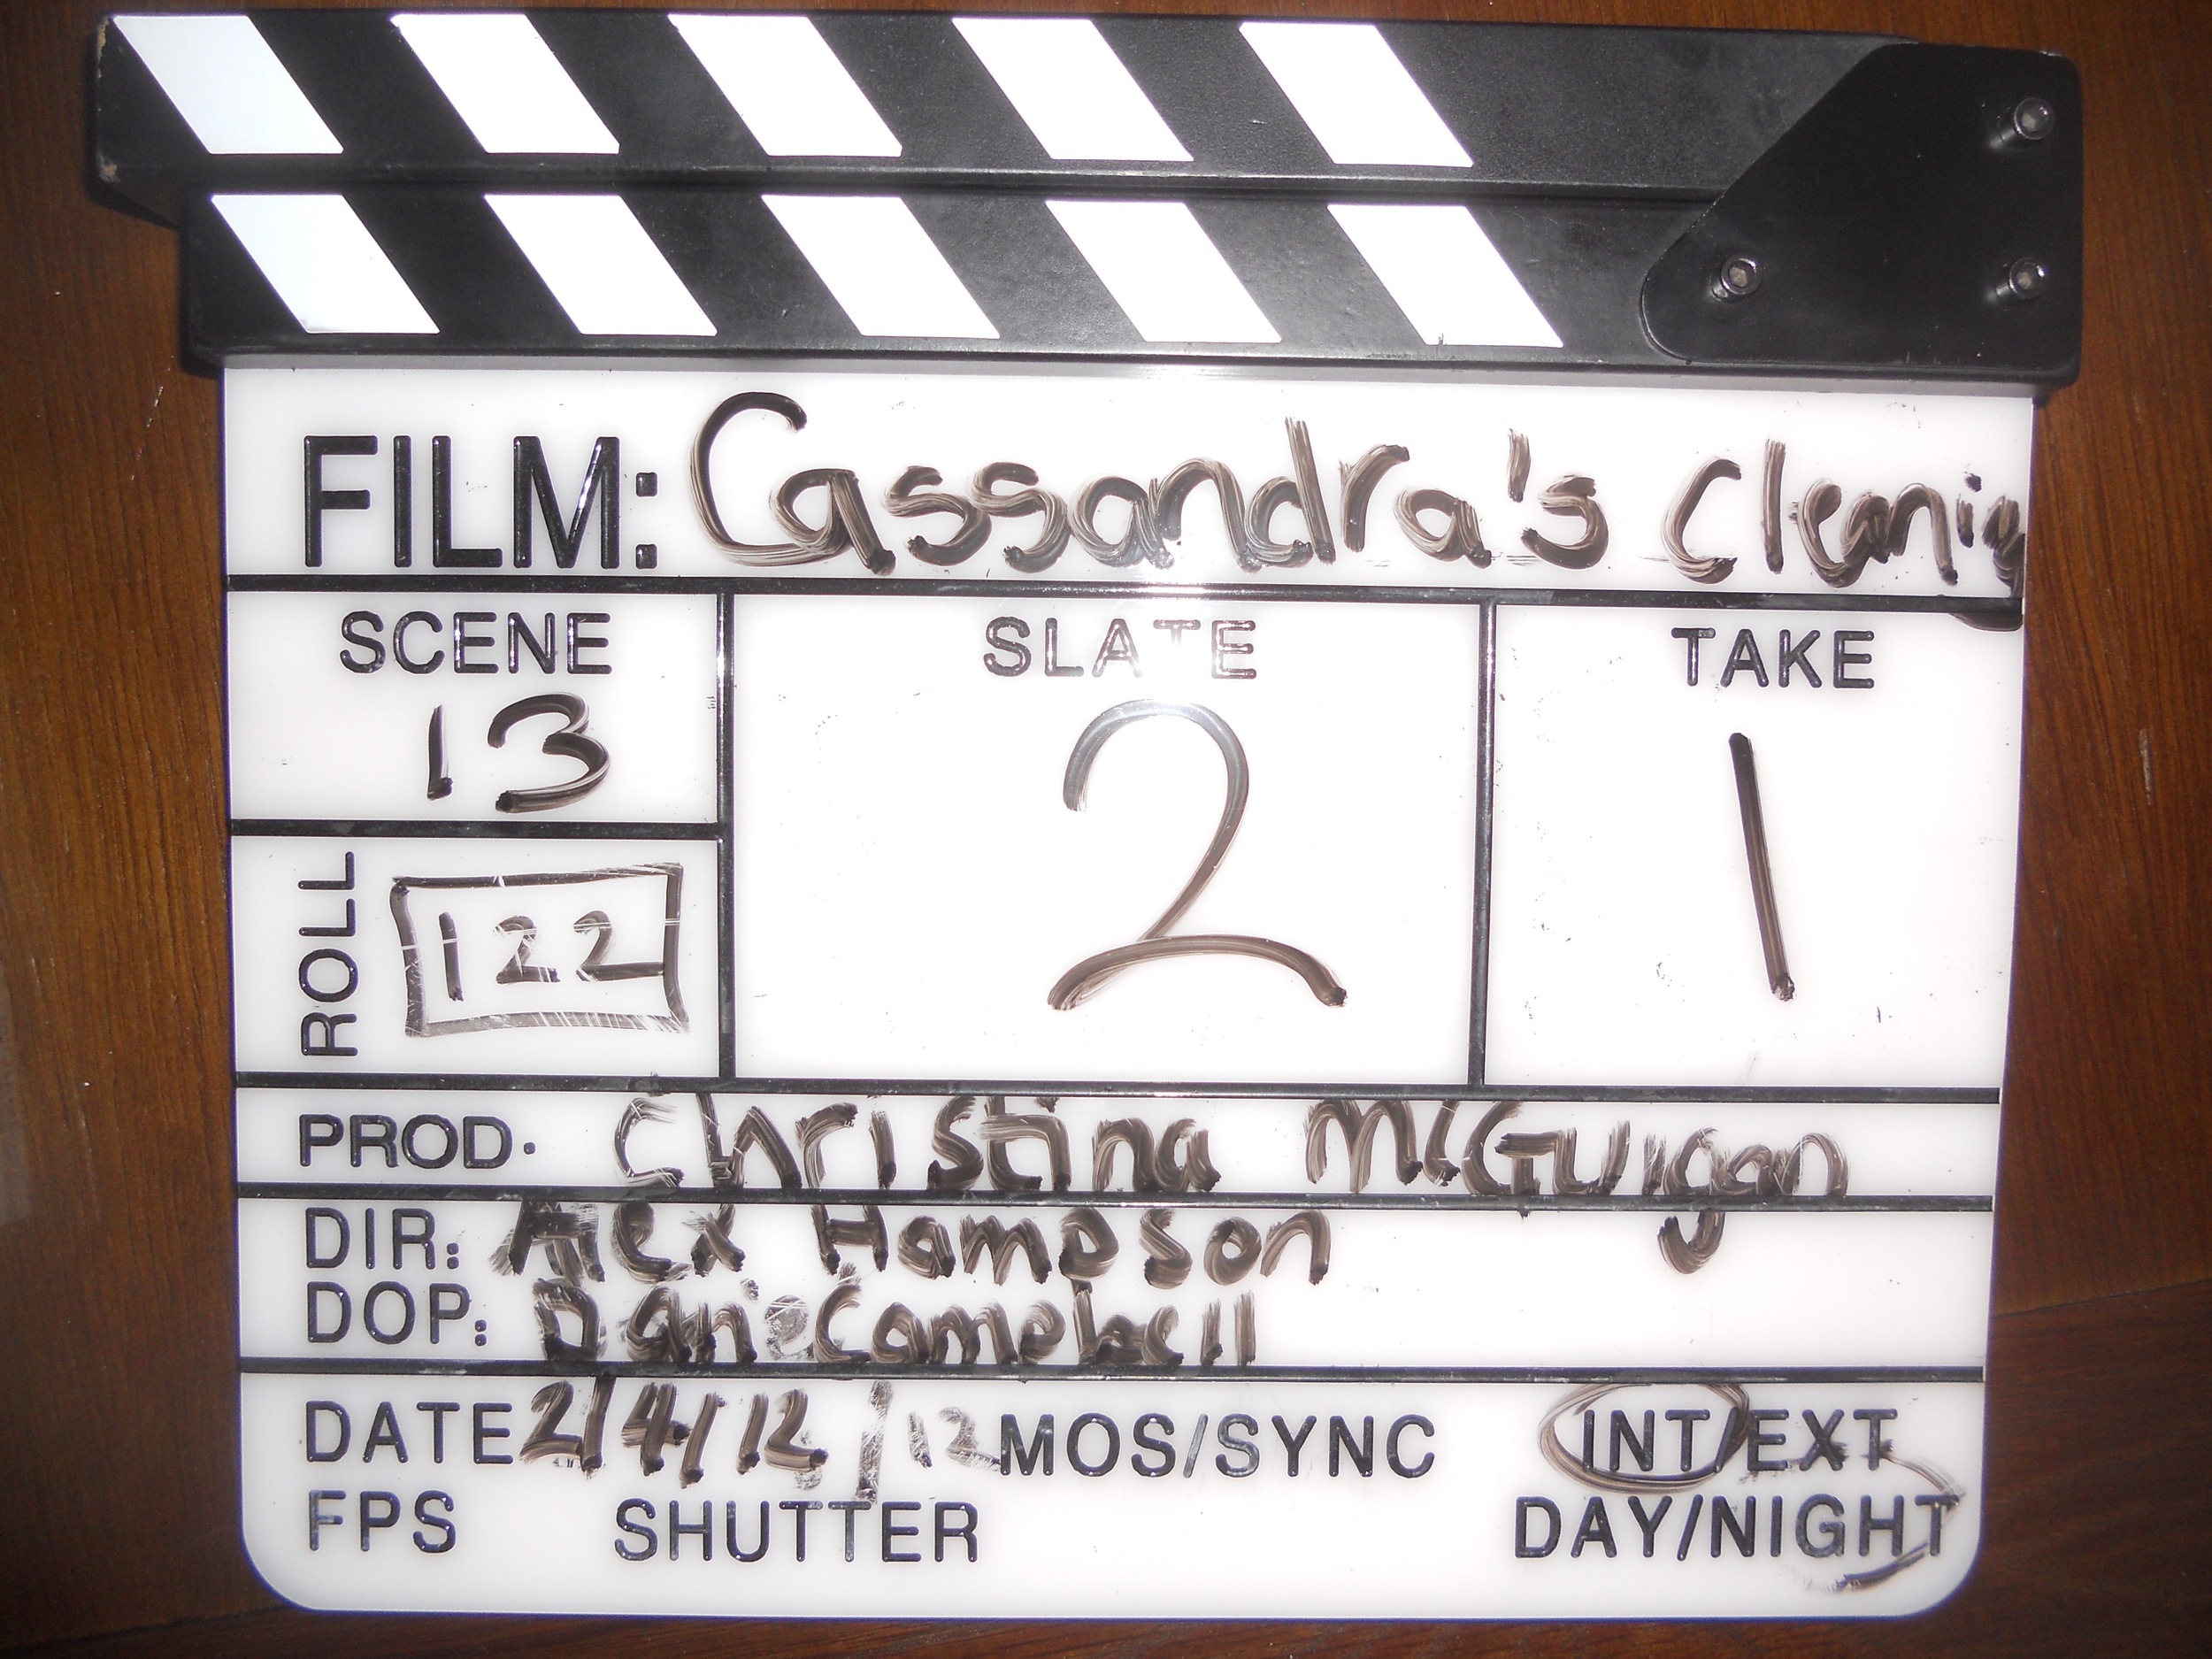 Cassandra's Cleaning Film